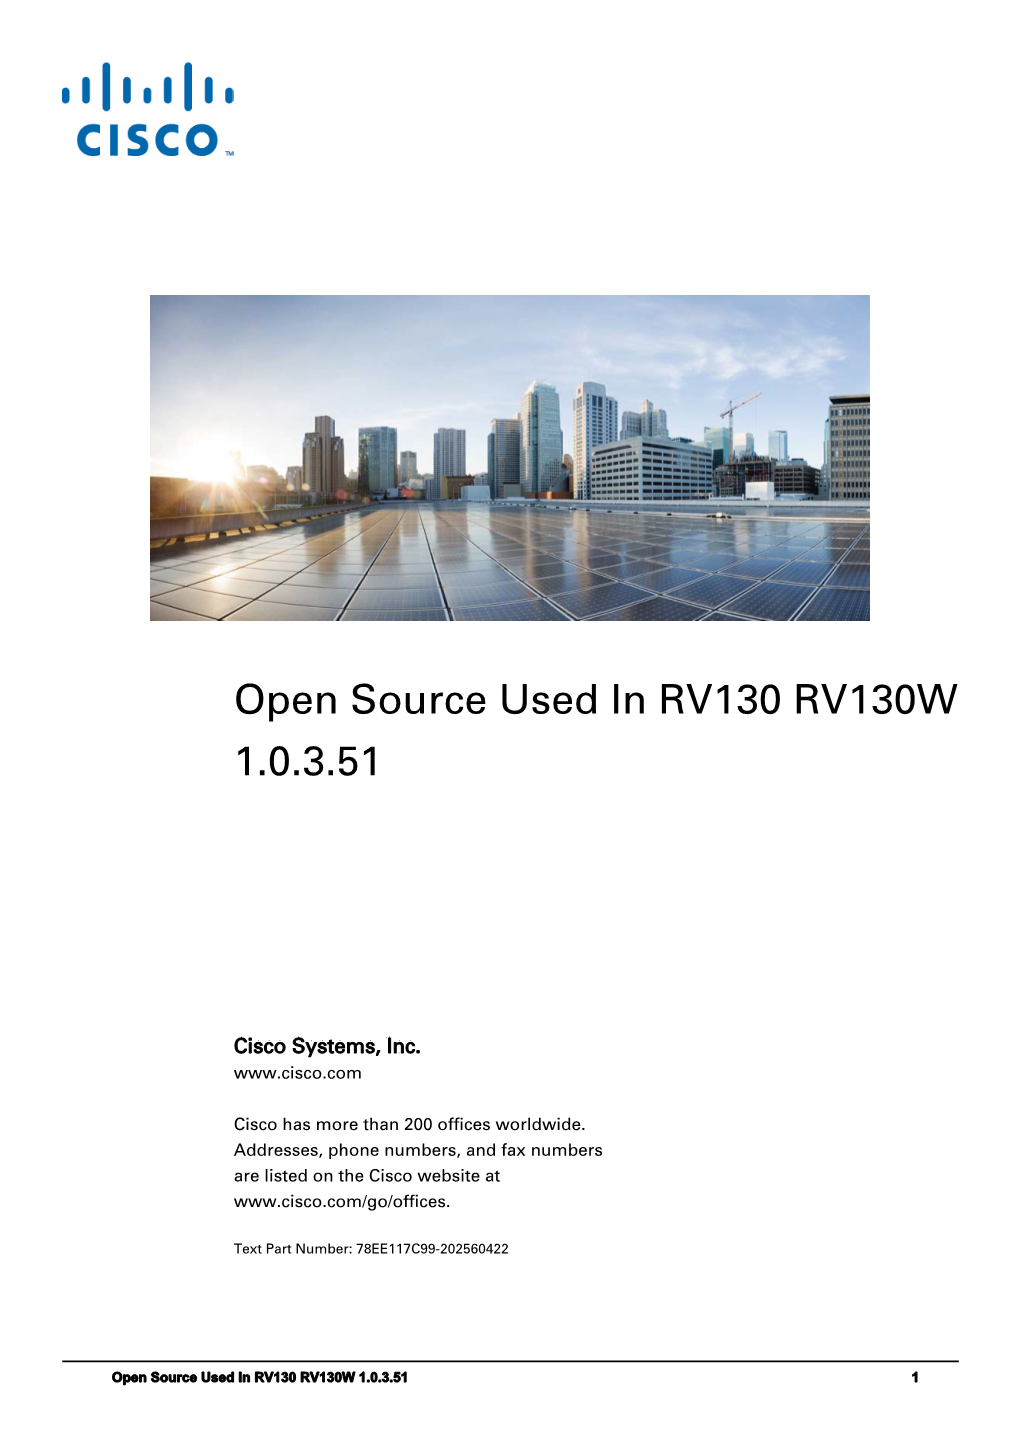 Open Source Used in Rv130x V1.0.3.51